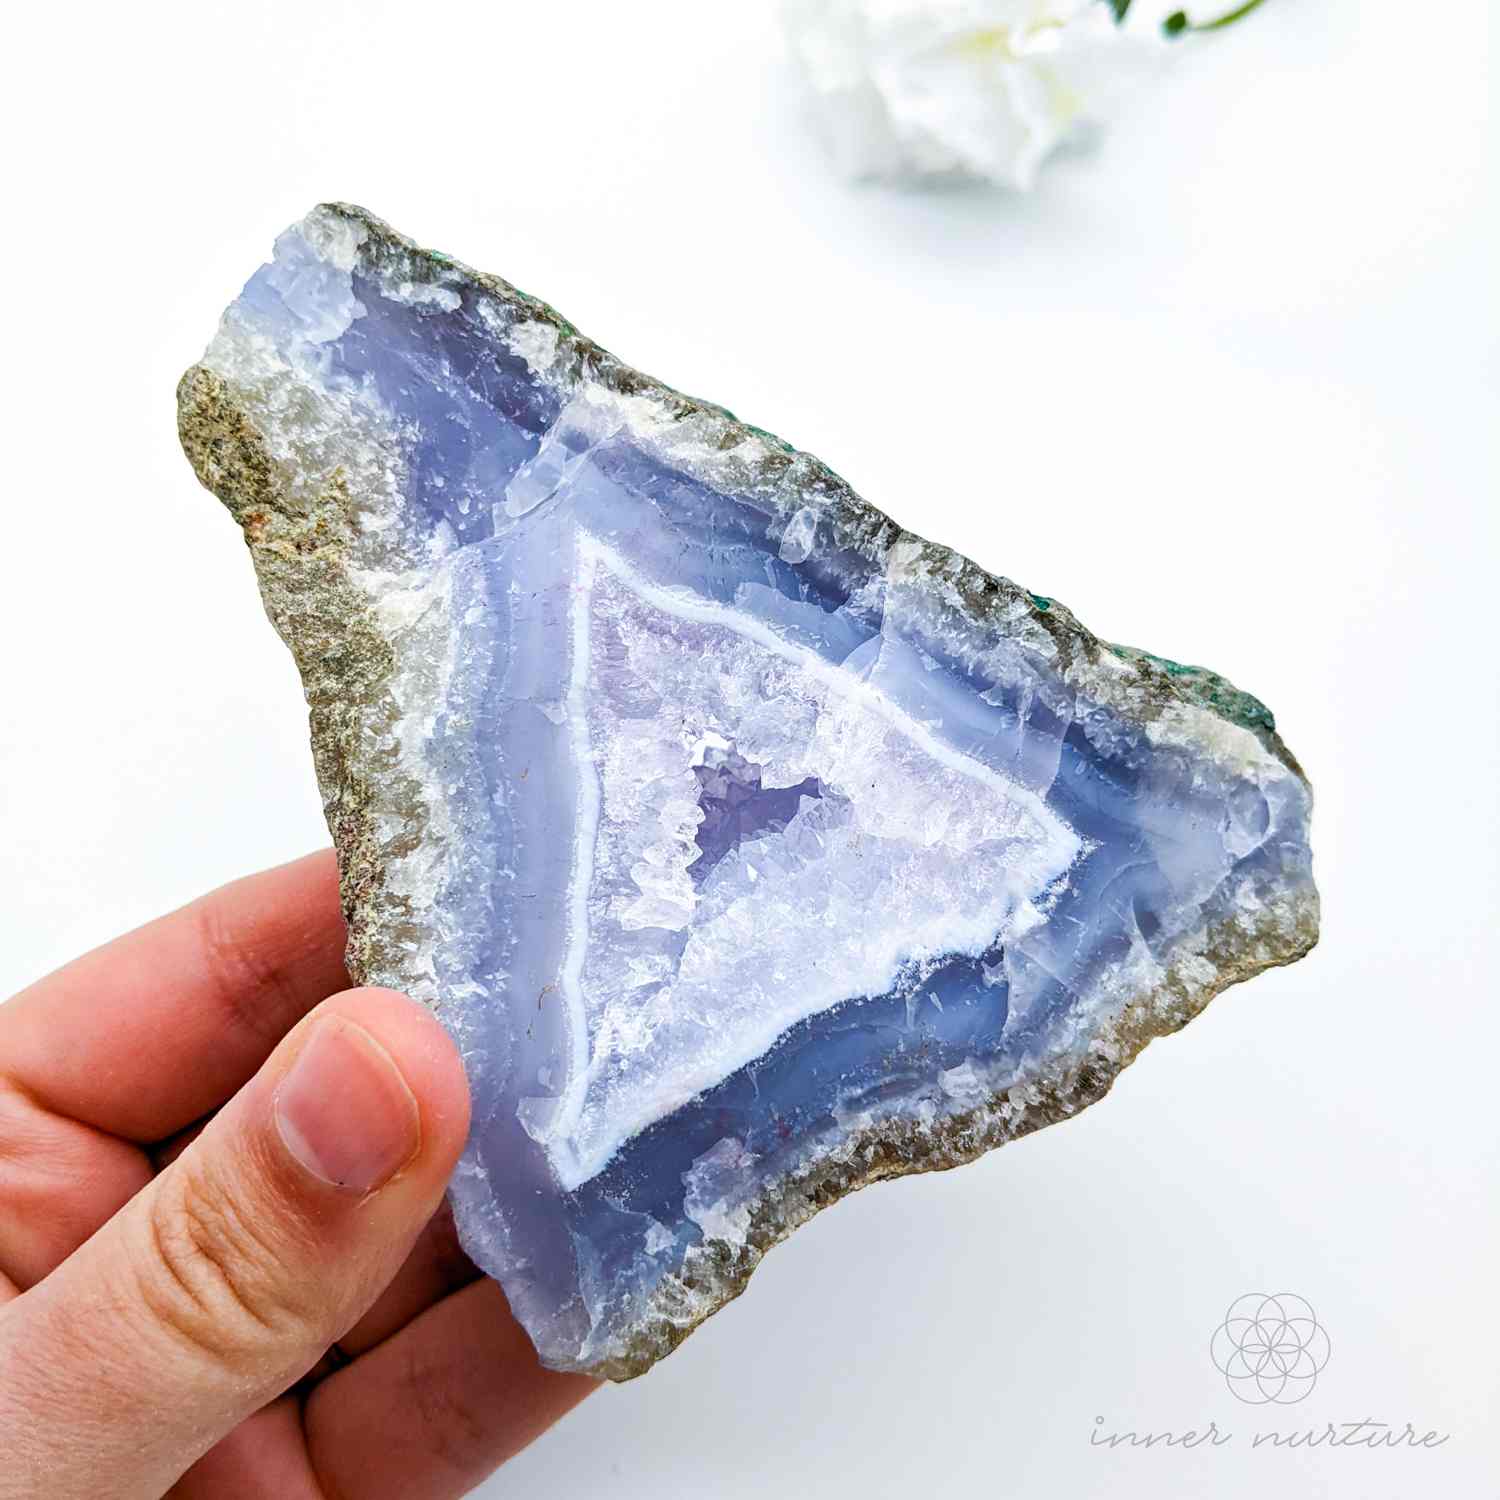 blue lace agate geode - inner nurture online crystal shop